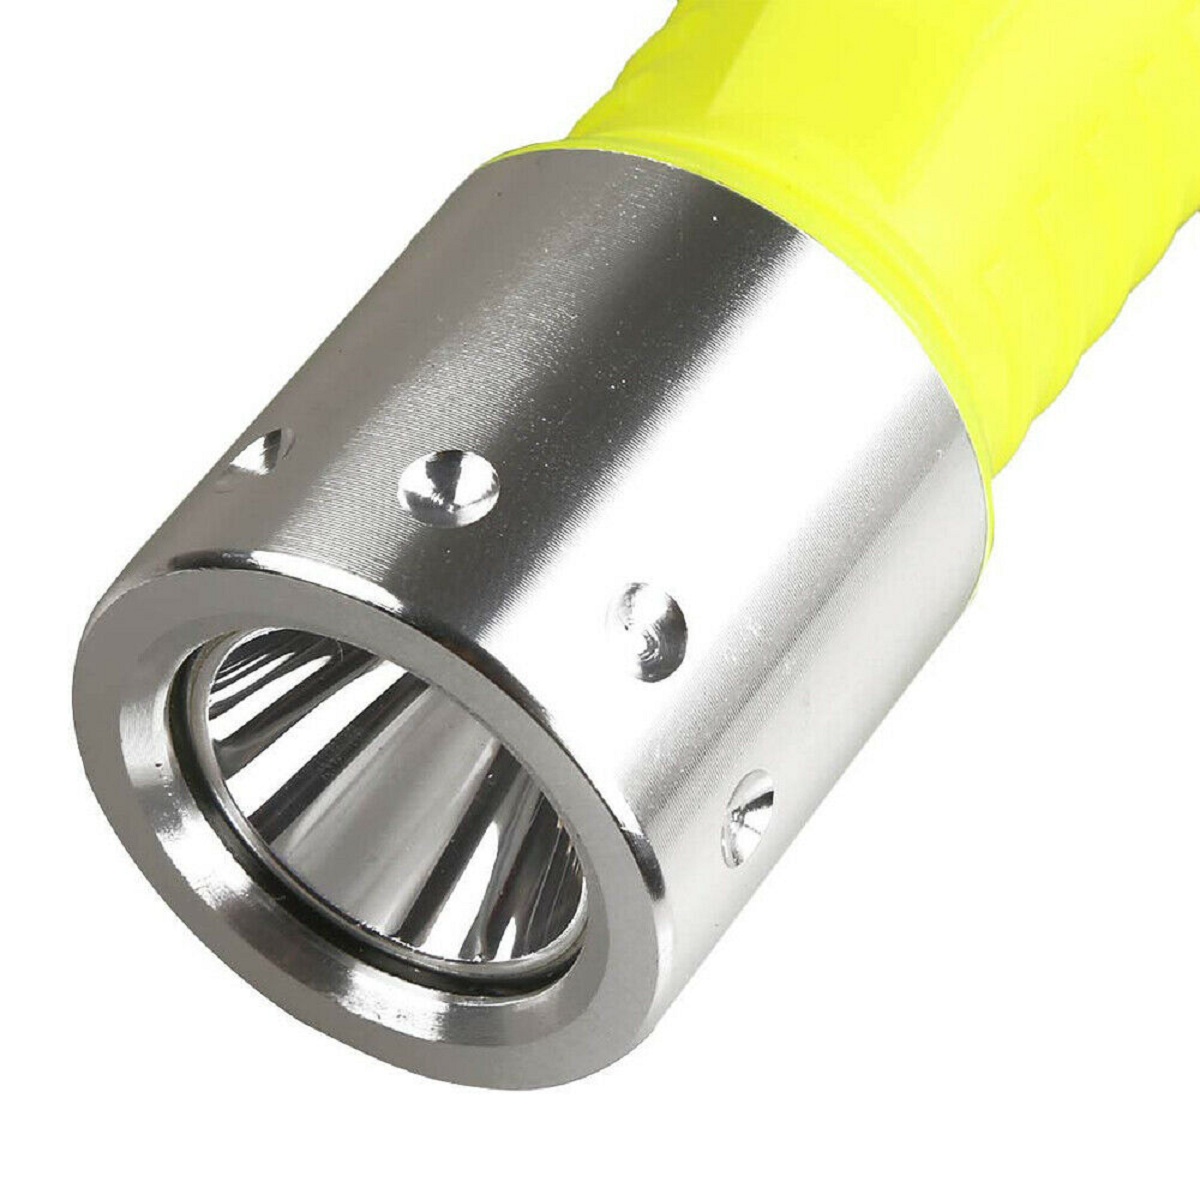 LED-XM-T6-Professional-Diving-Flashlight-Scuba-Safety-Light-Diving-Lamp-Diving-Lighting-Tool-Work-Li-1568985-6